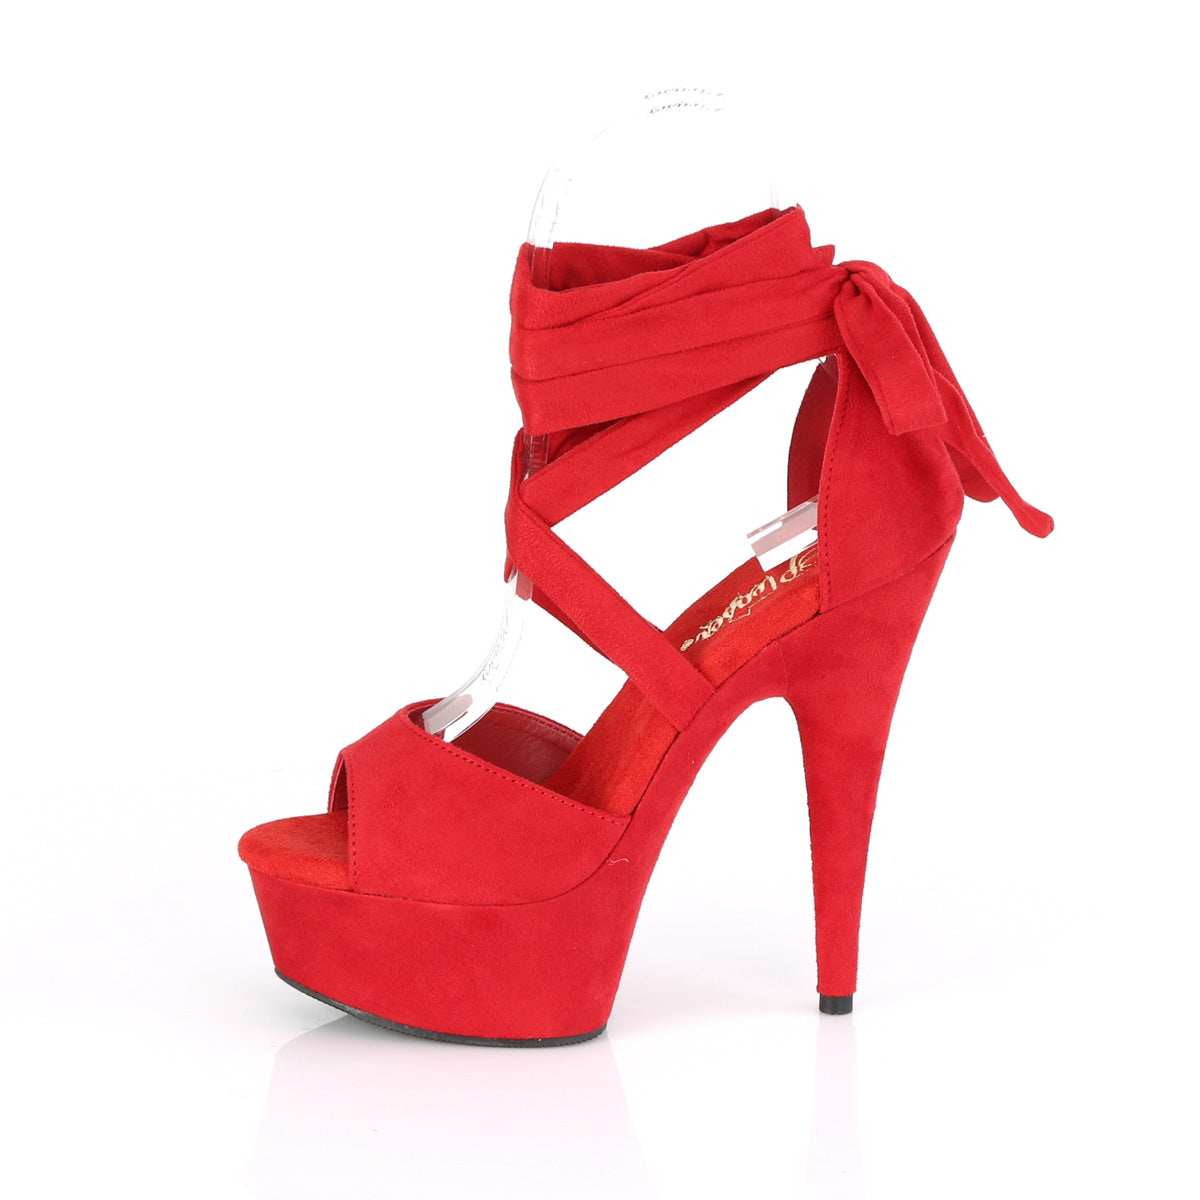 DELIGHT-679 Pleaser 6 Inch Heel Red Pole Dancing Platforms-Pleaser- Sexy Shoes Pole Dance Heels